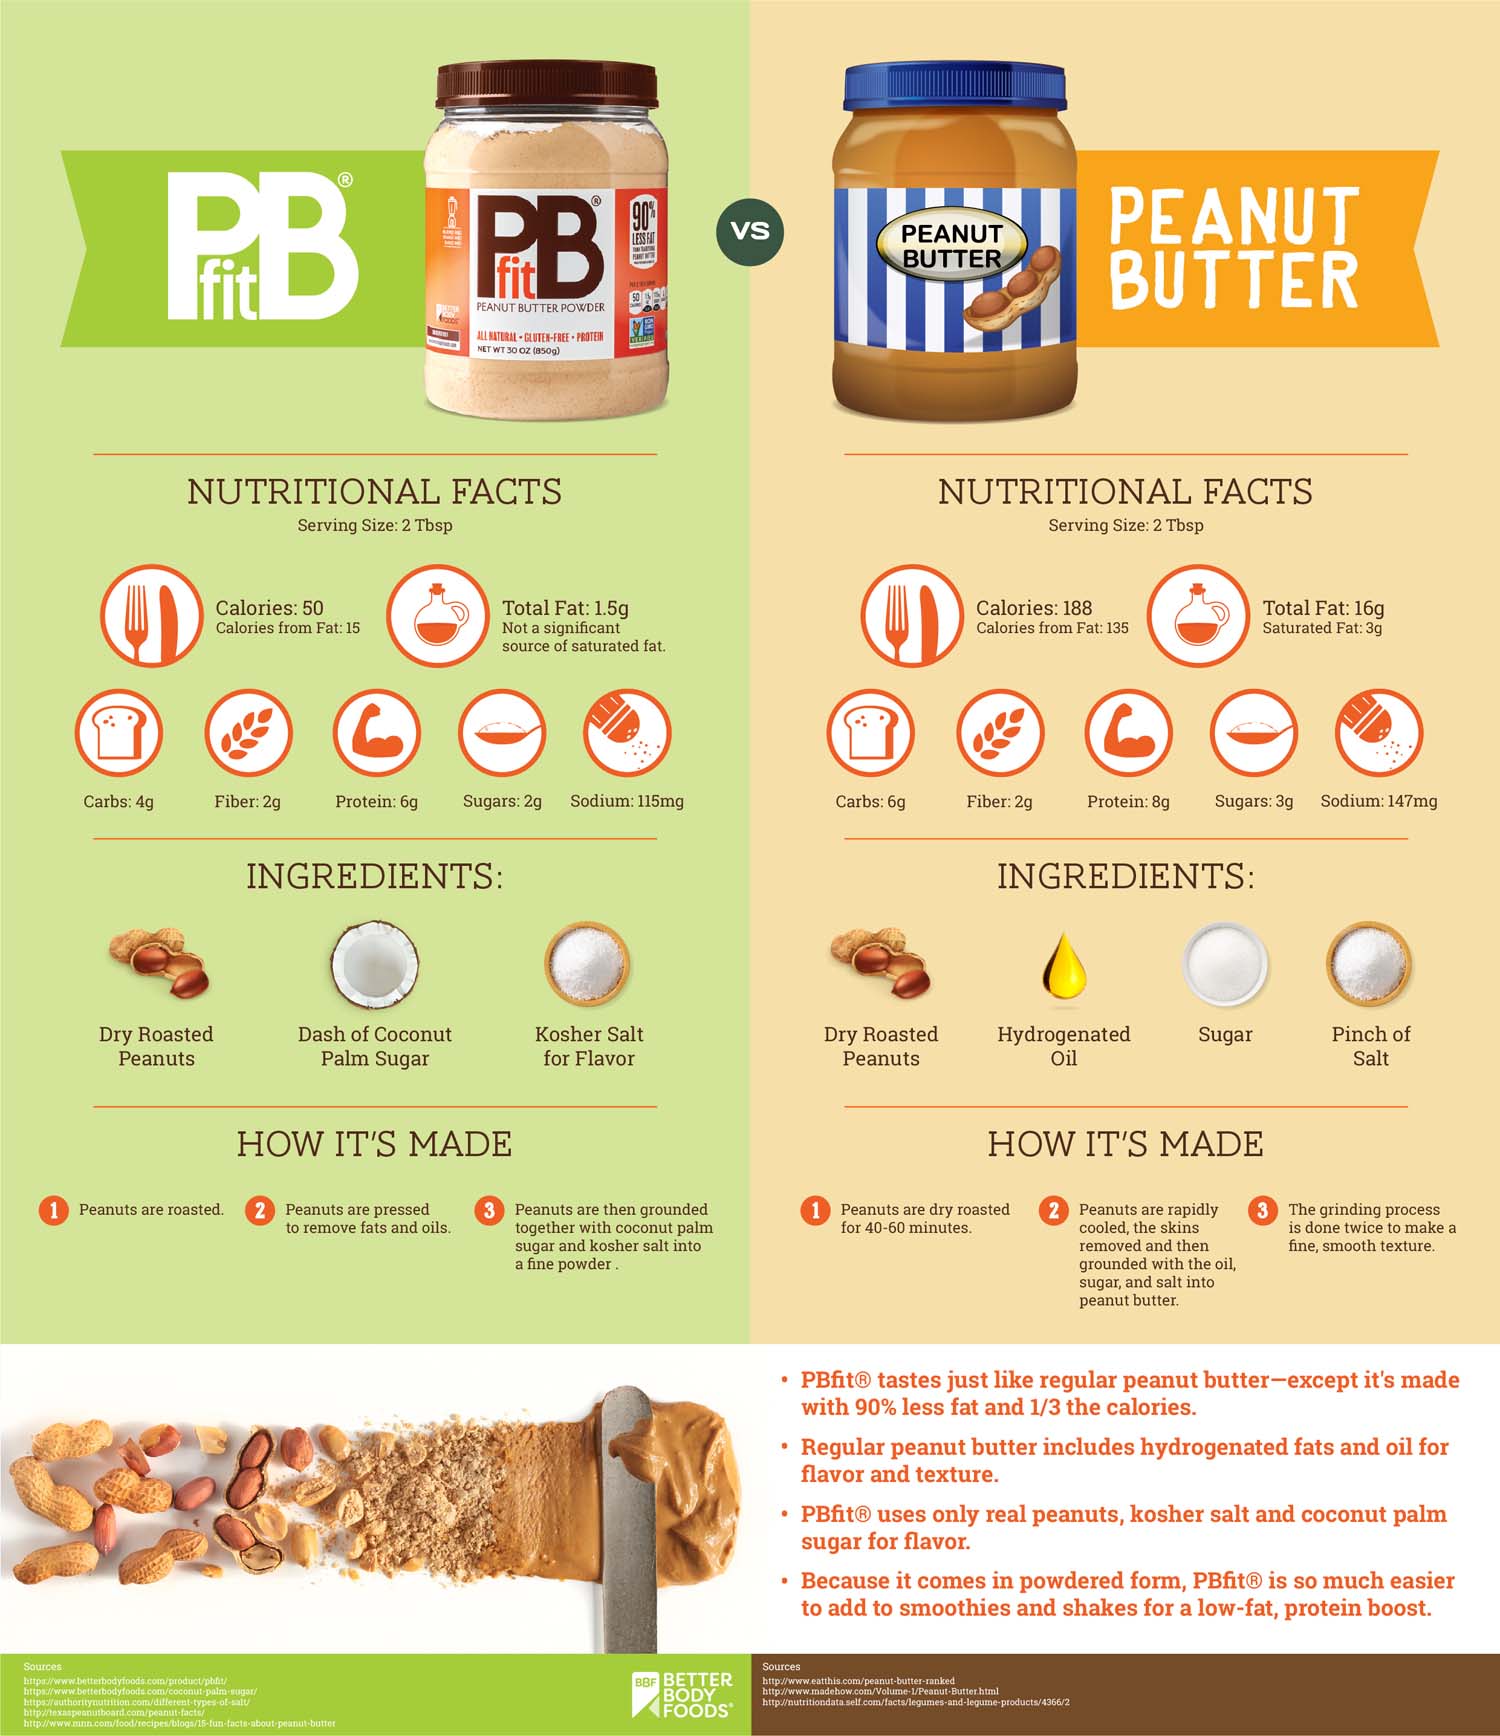 Peanut Butter vs Powdered Peanut Butter